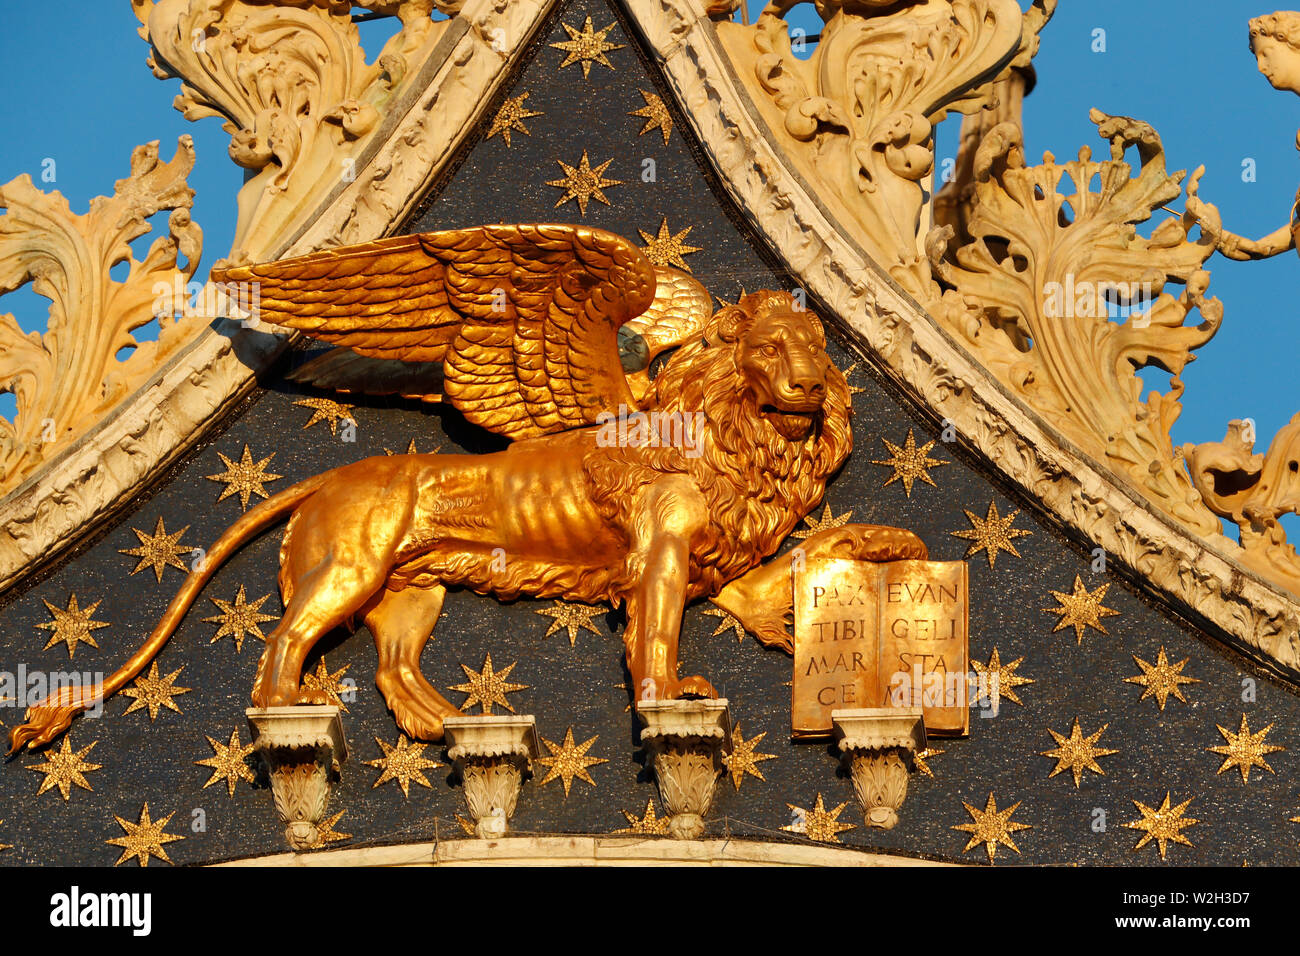 León dorado alado fotografías e imágenes de alta resolución - Alamy